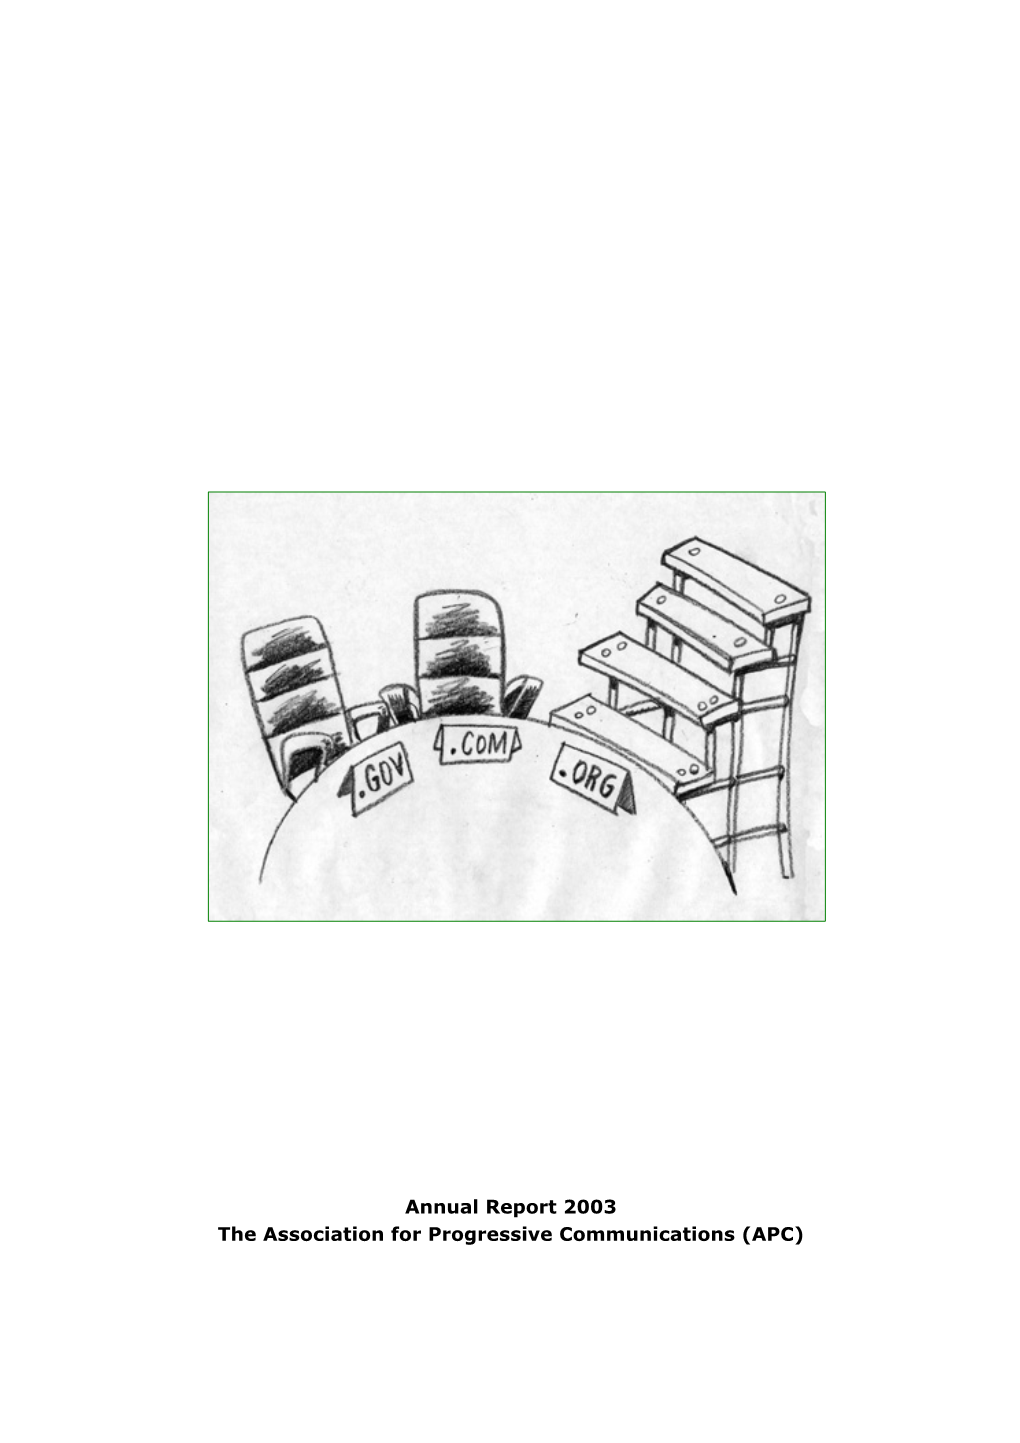 Annual Report 2003 the Association for Progressive Communications (APC)